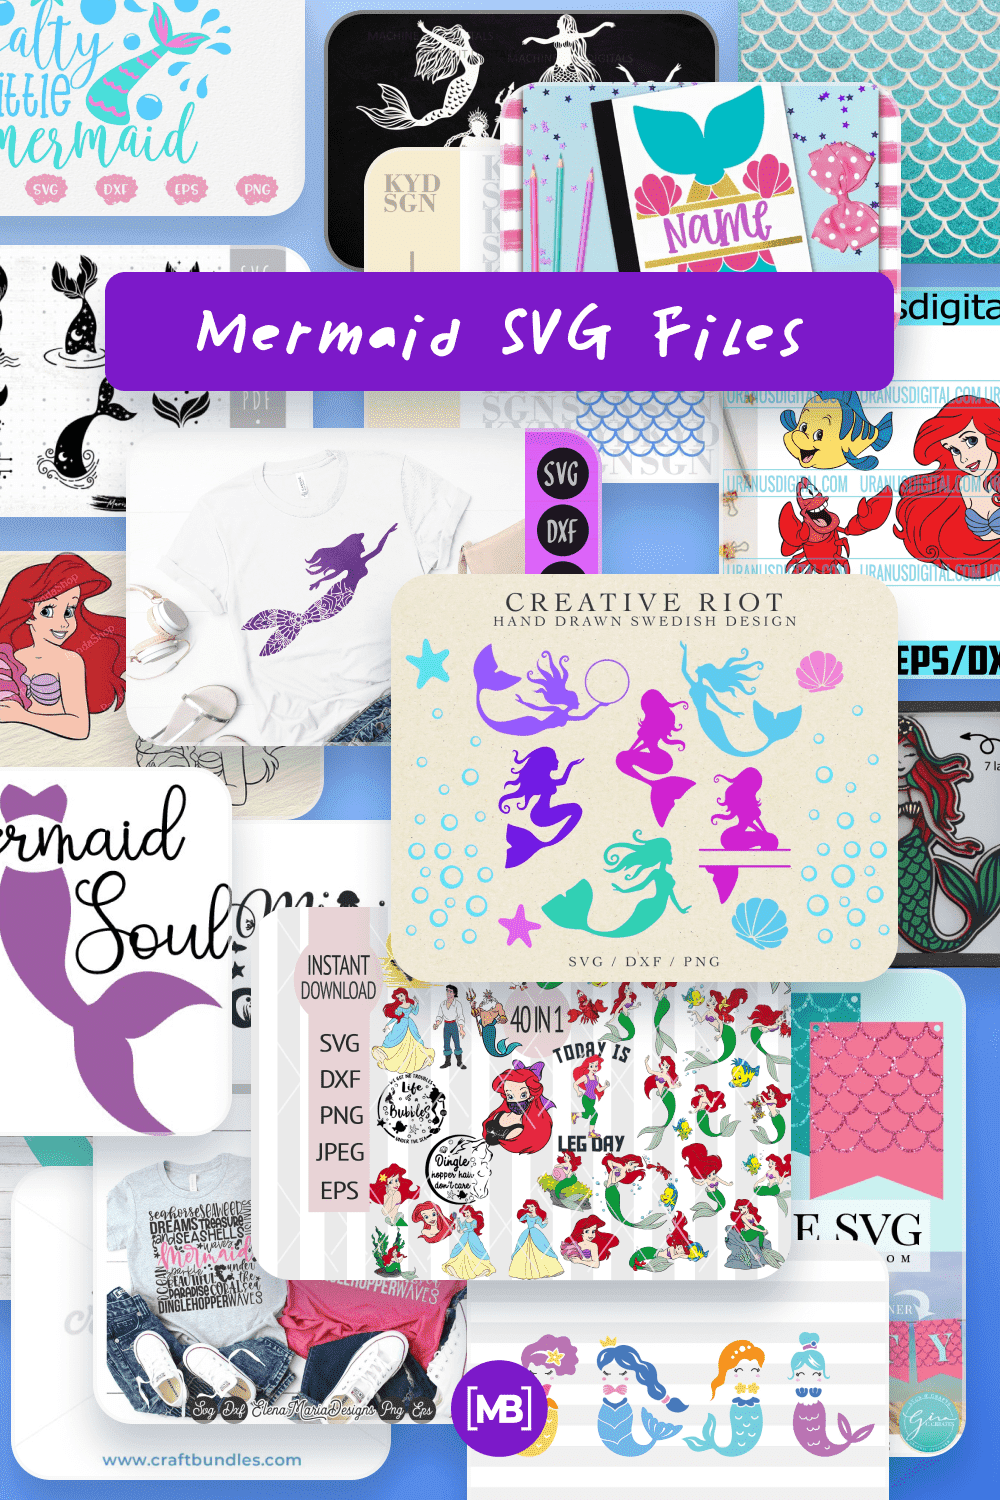 Mermaid SVG Images Pinterest.